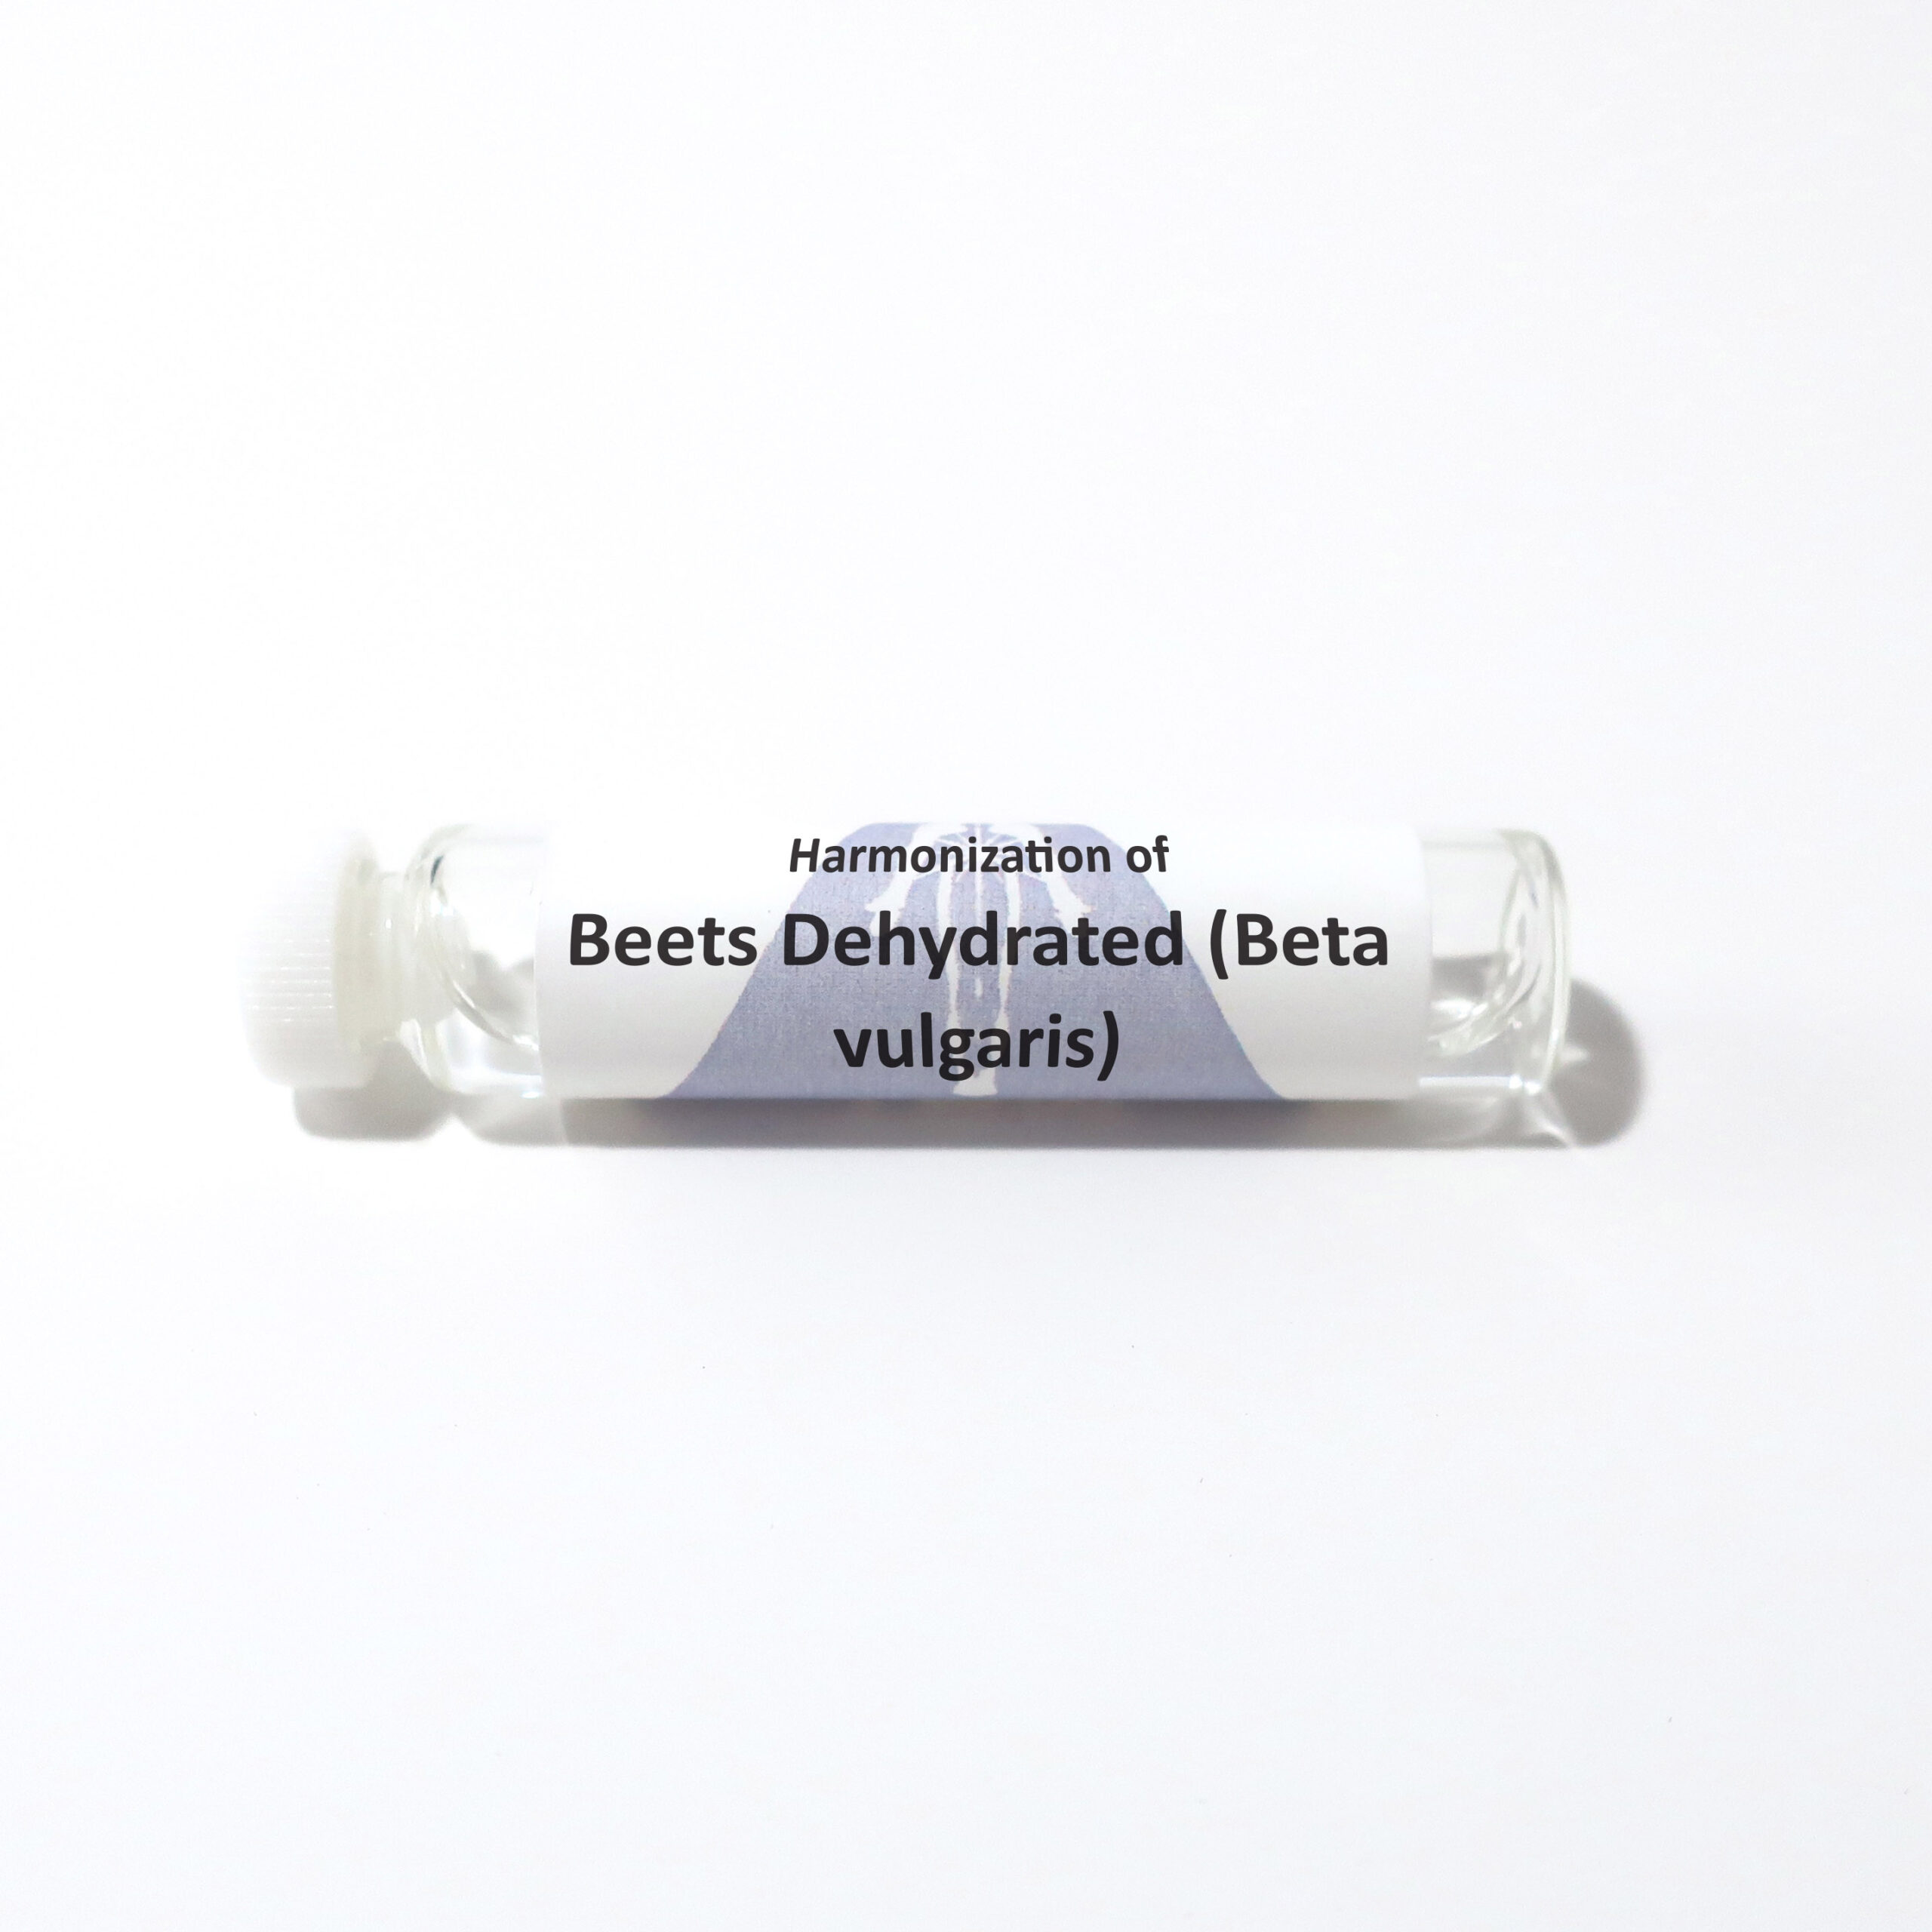 Beets, Dehydrated (Beta vulgaris)